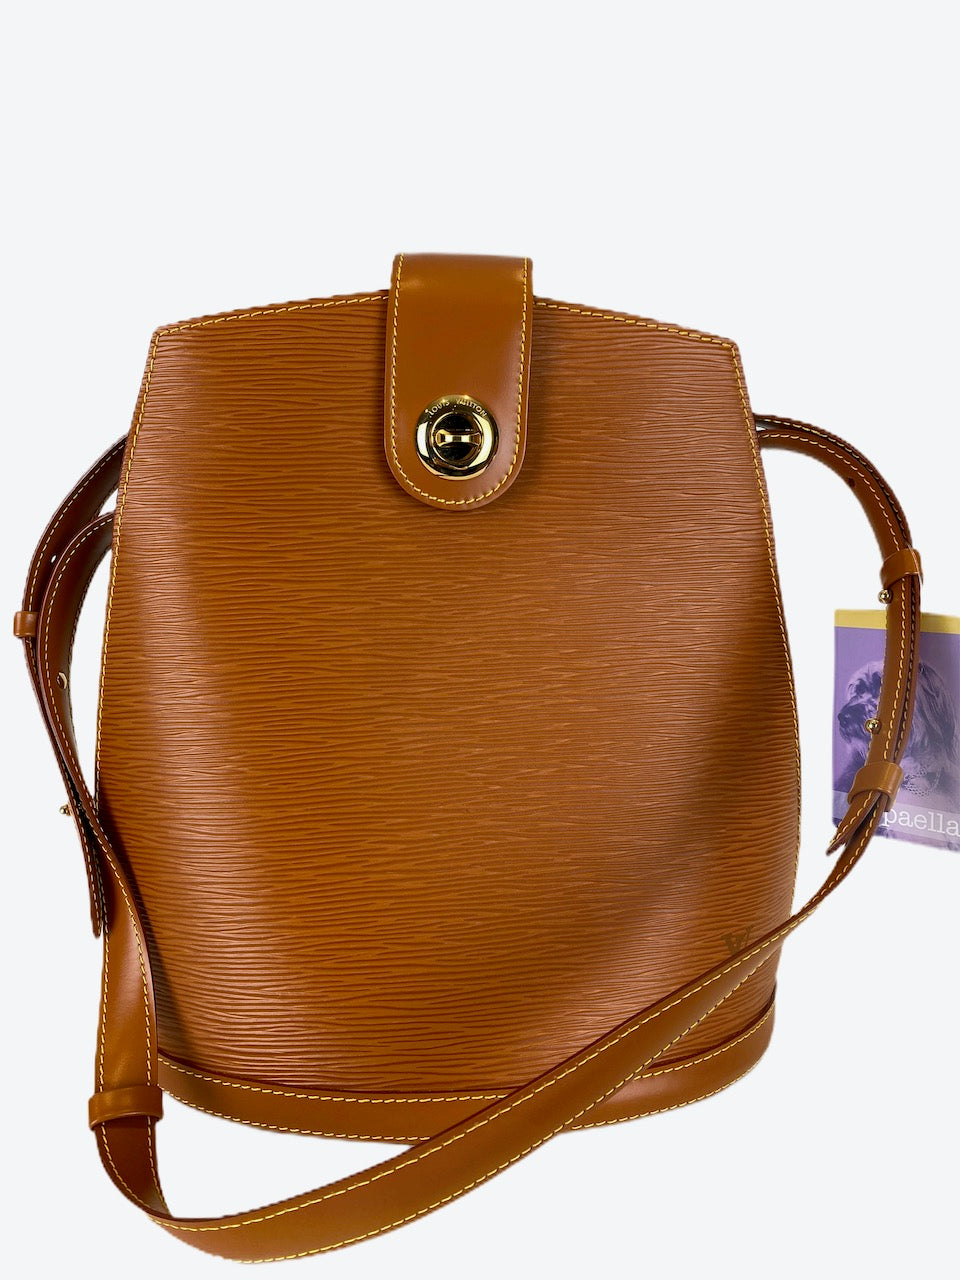 Louis Vuitton Tan Epi Leather "Cluny" Bucket Bag - As Seen on Instagram 2/9/20 - Siopaella Designer Exchange